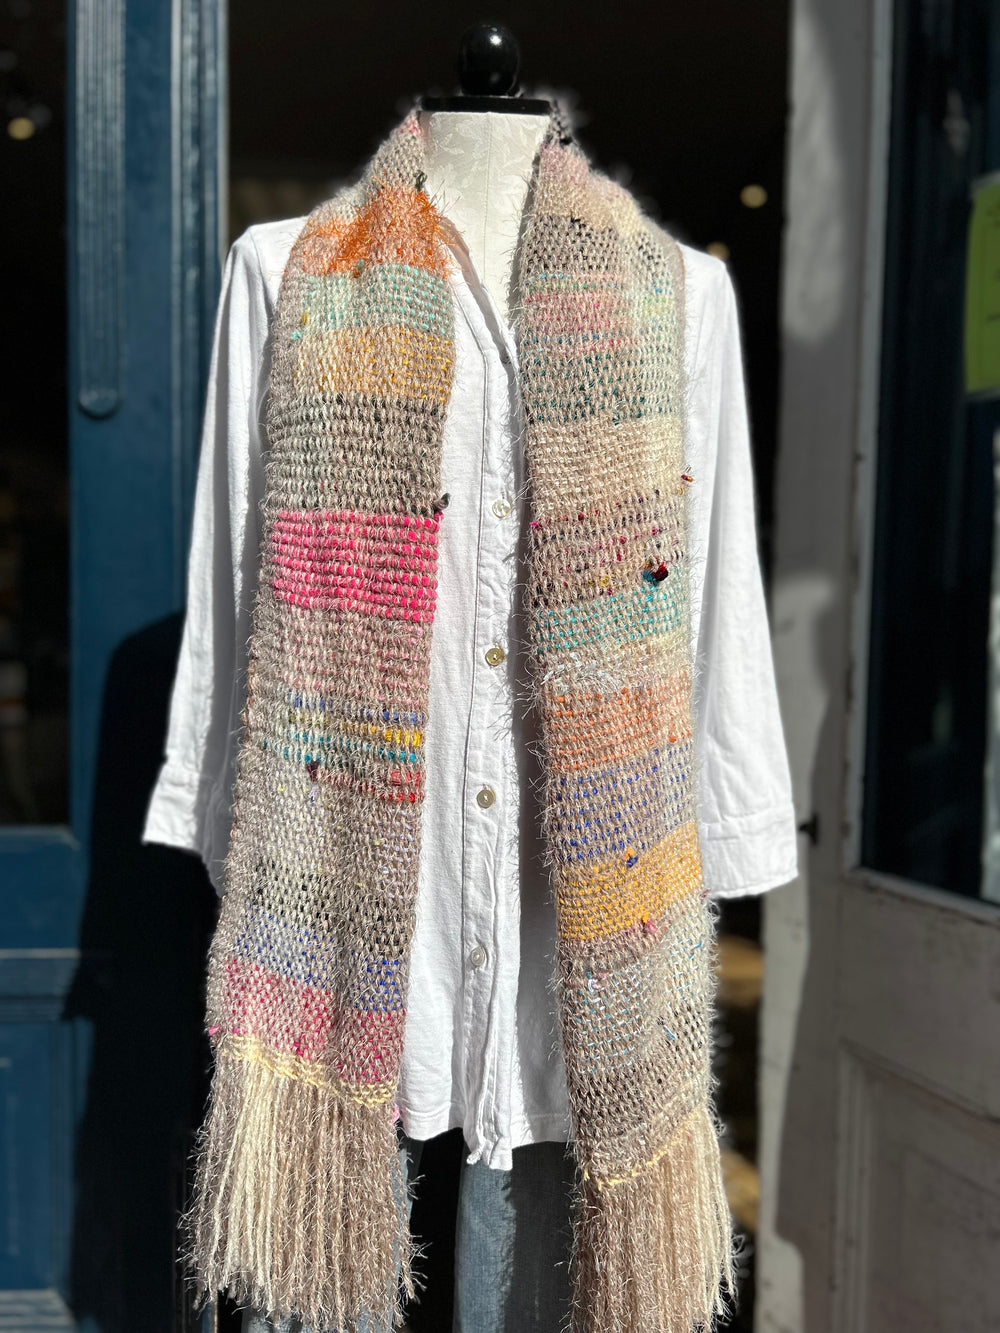 Natalie Reid scarf, wide hand-woven fiber art